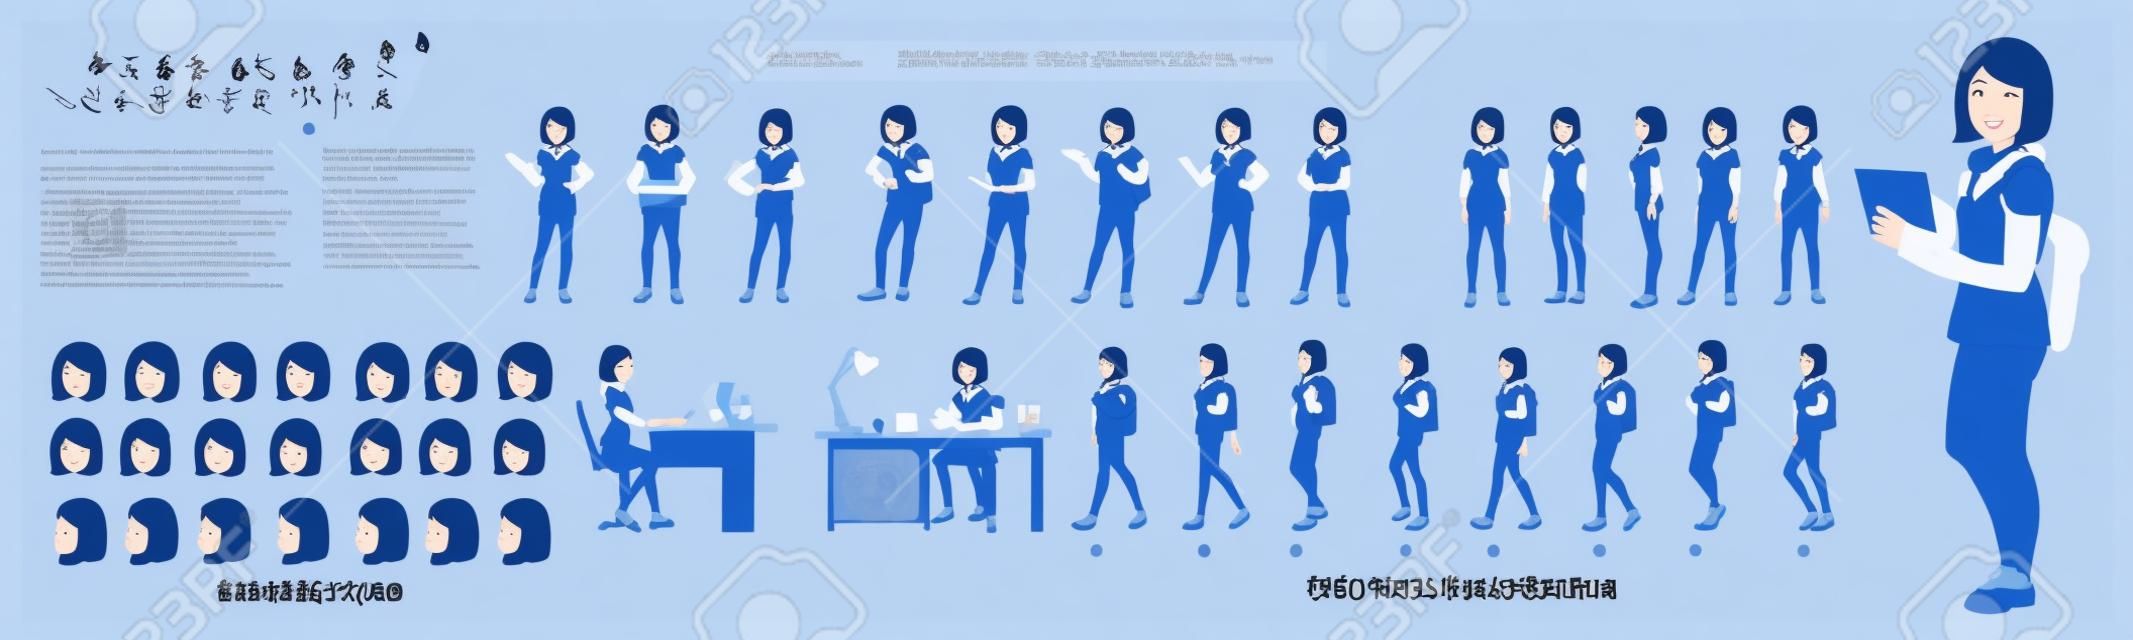 Asian Girl Student Character Design Model Sheet mit Walk-Cycle-Animation. Mädchen-Charakterdesign.